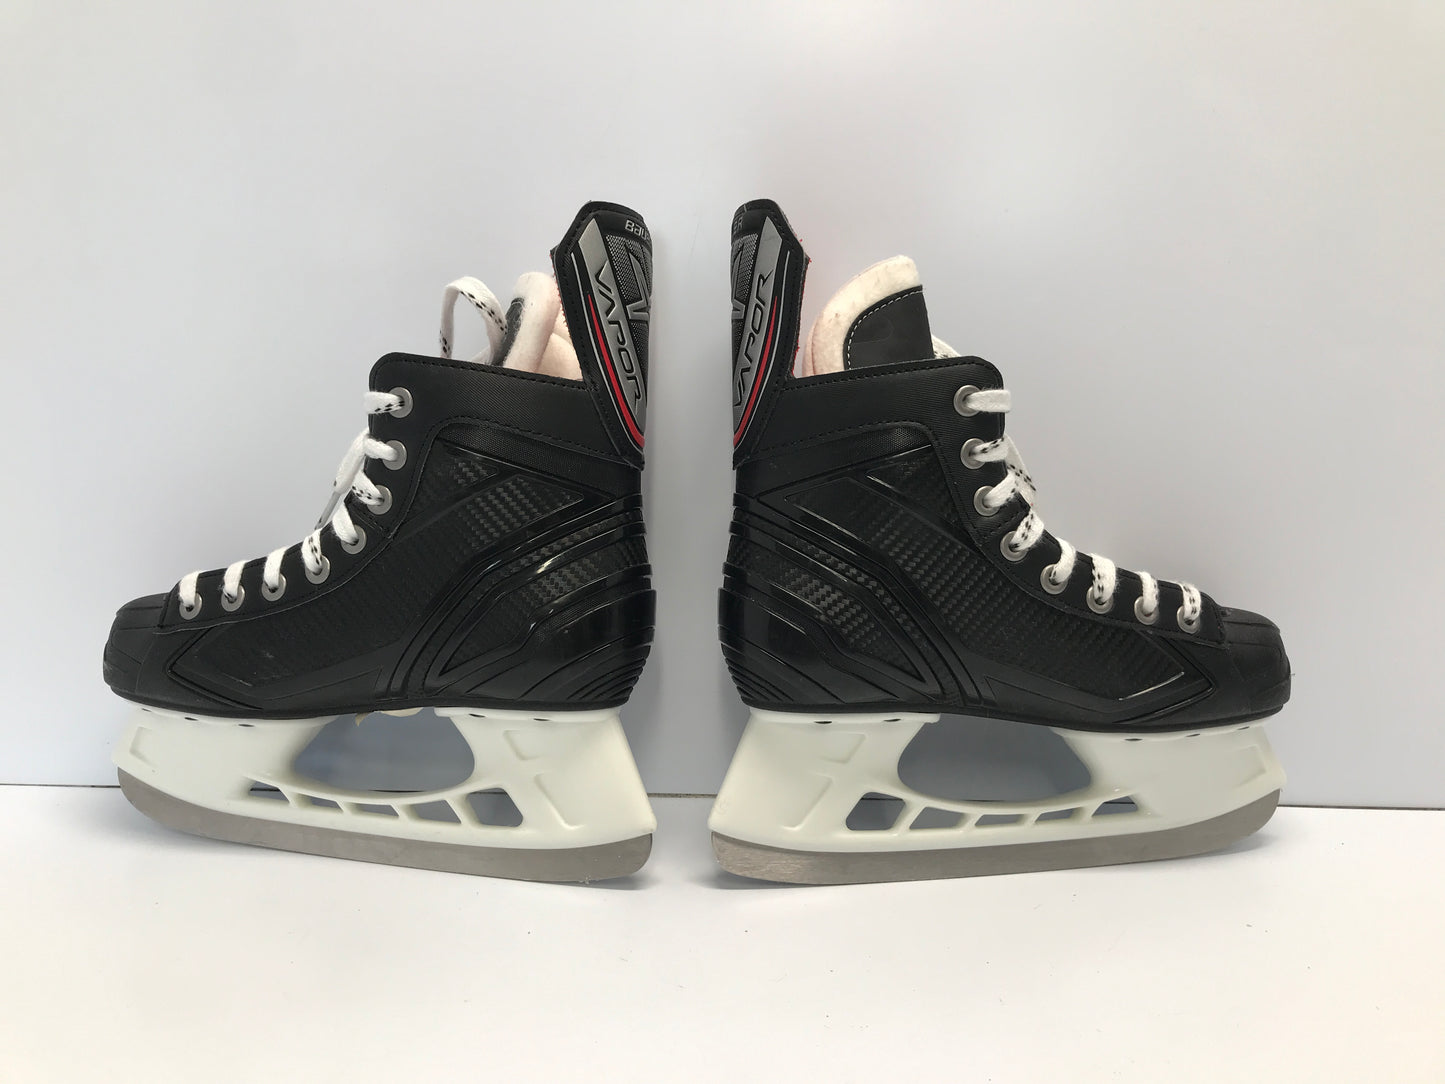 Hockey Skates Child Size 4 Shoe Size 3 Skate Bauer Vapor X300 Like New